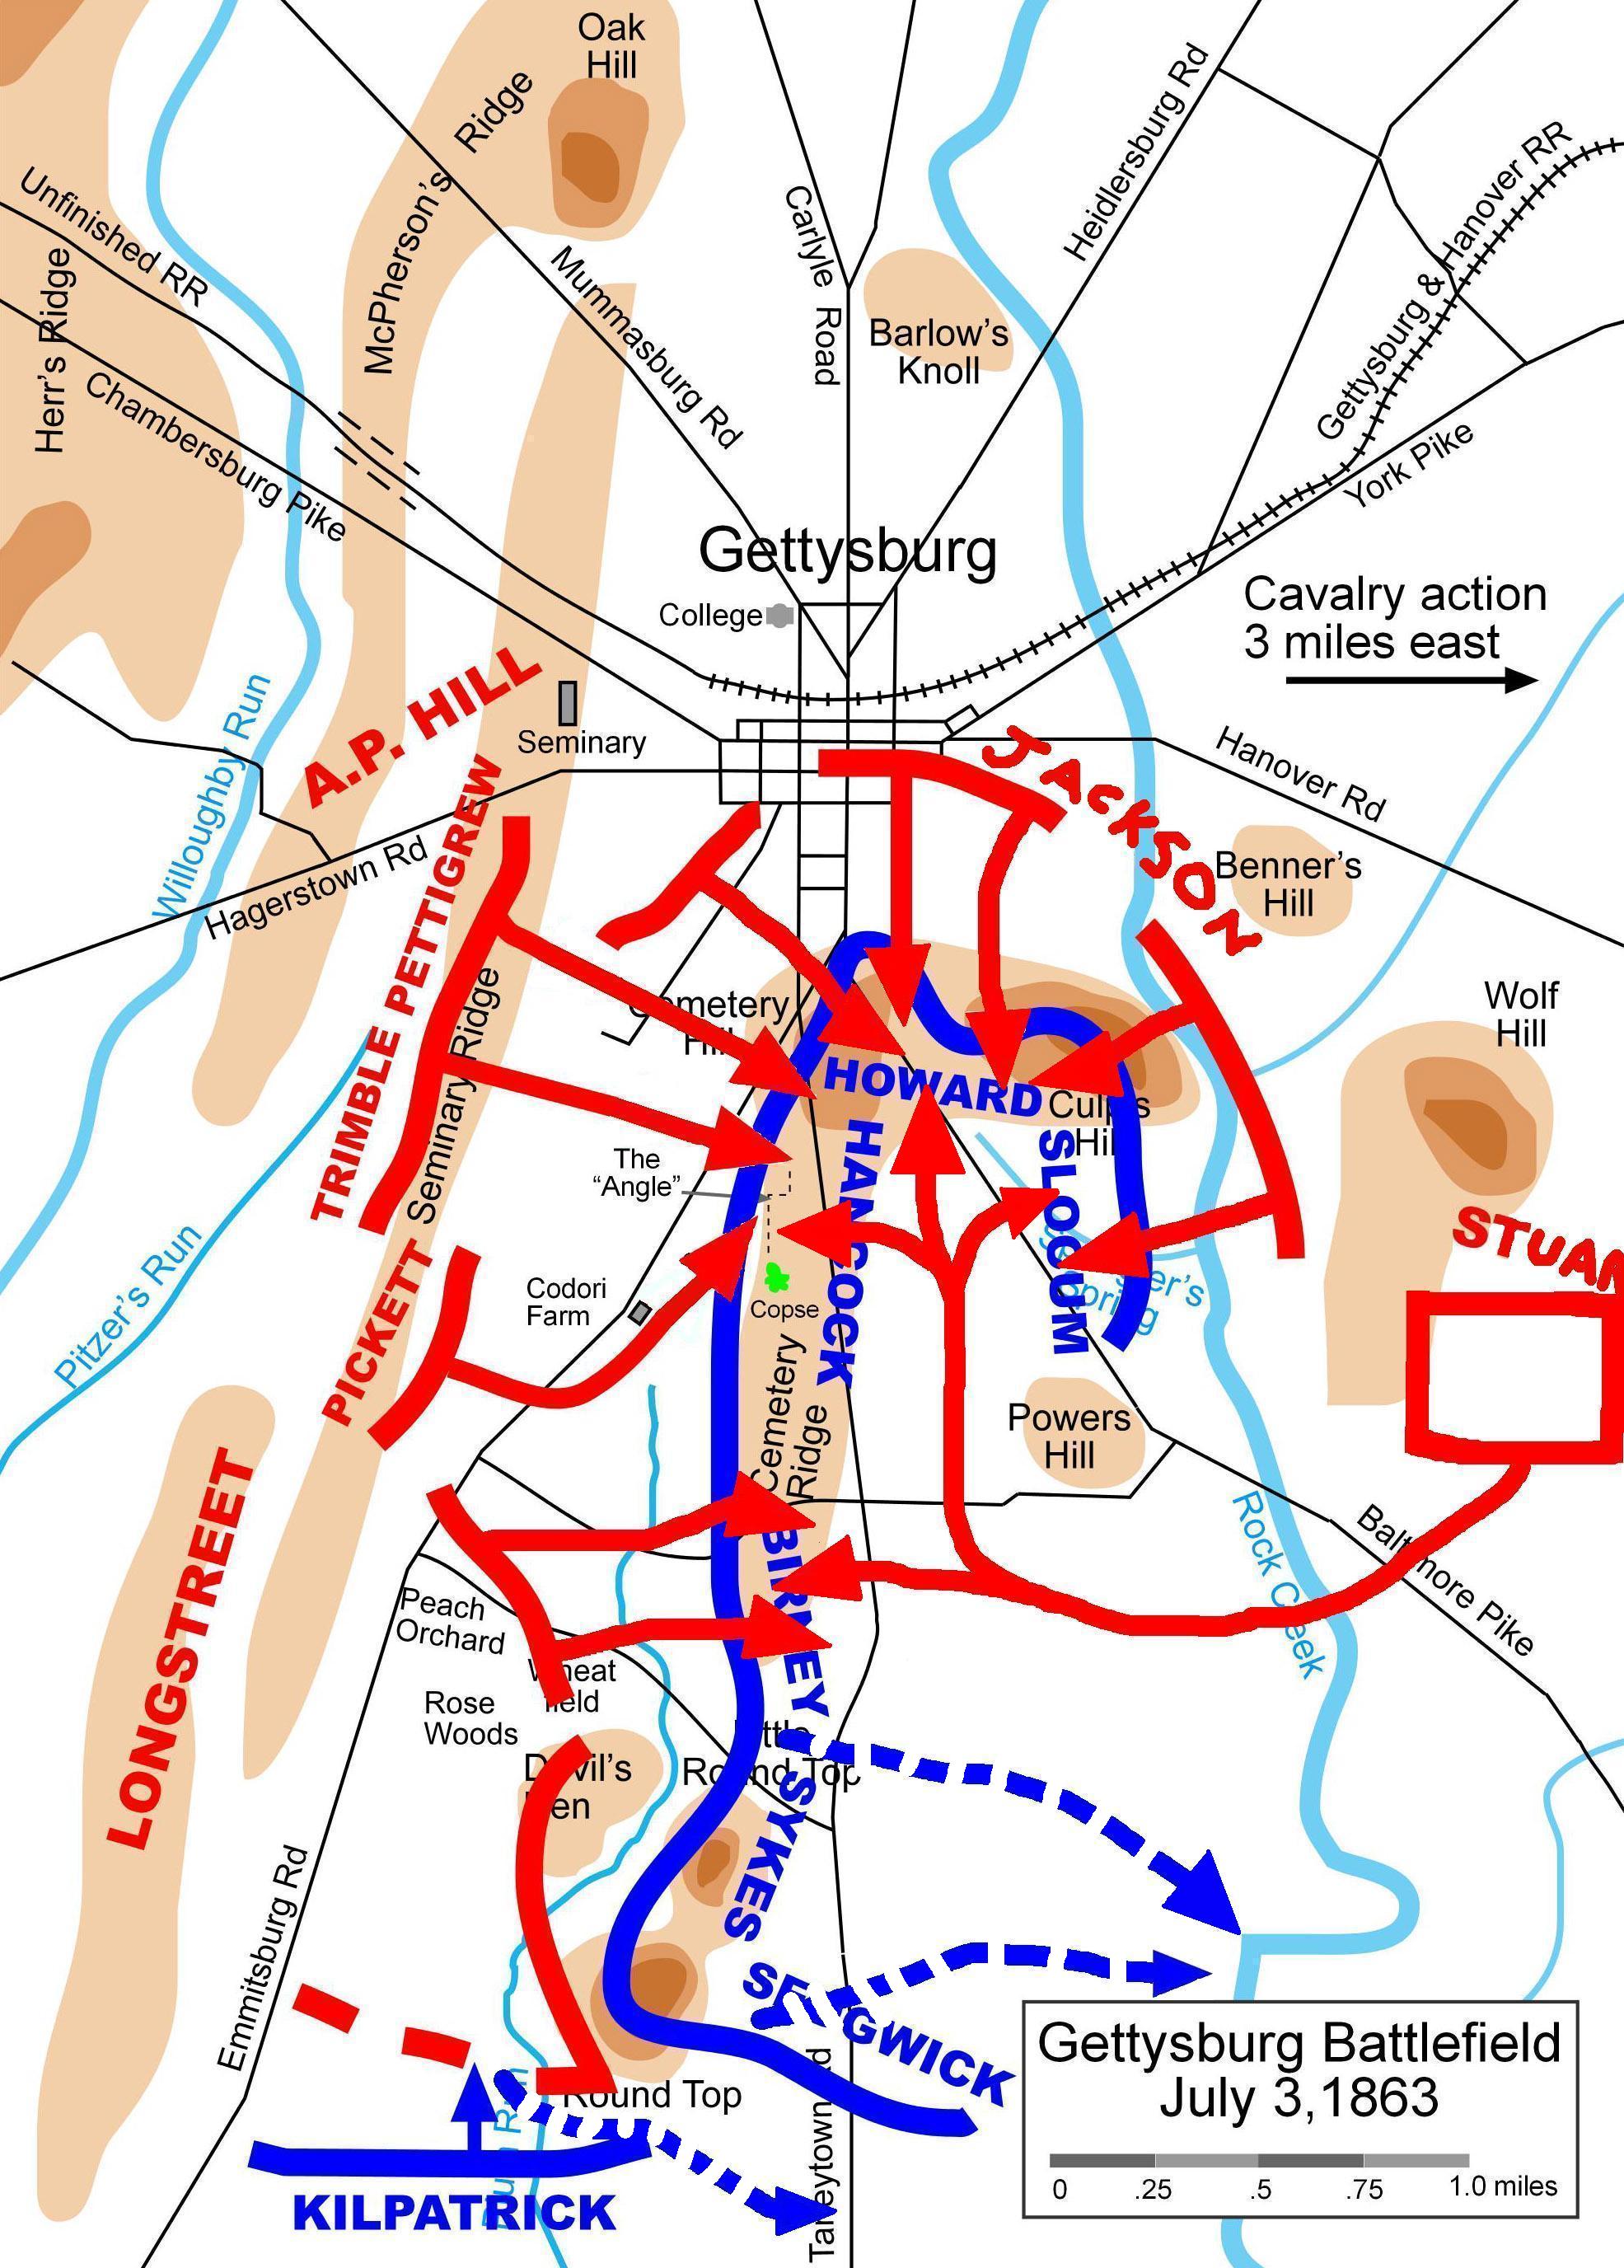 Tour Map Of Brooke Avenue At Gettysburg Battlefield - vrogue.co